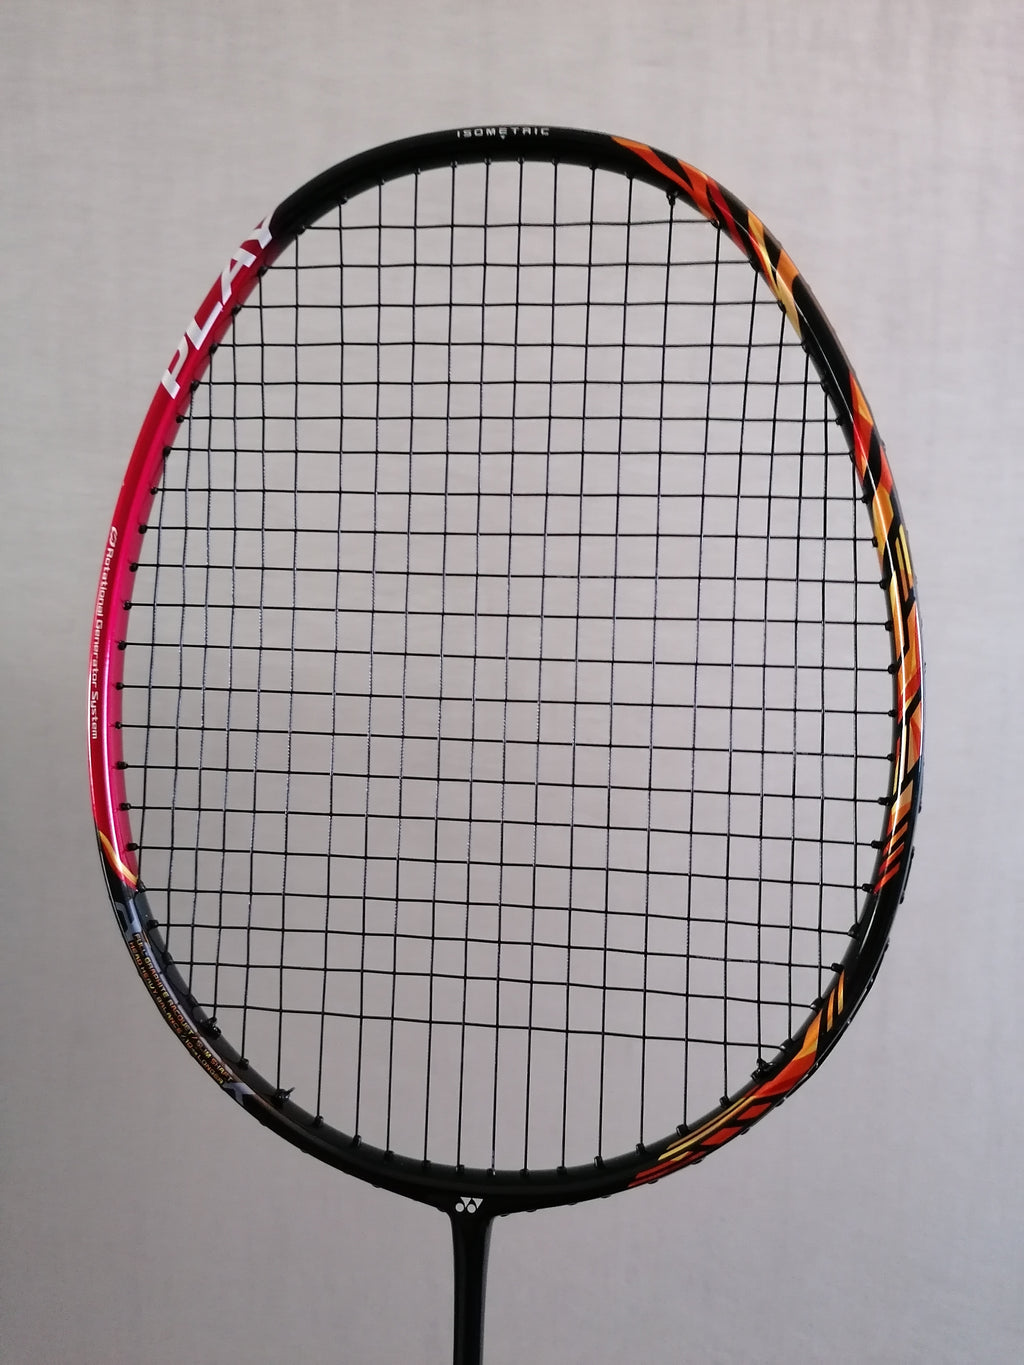 Yonex Astrox 99 Play 4U badminton racket - badminton racket review